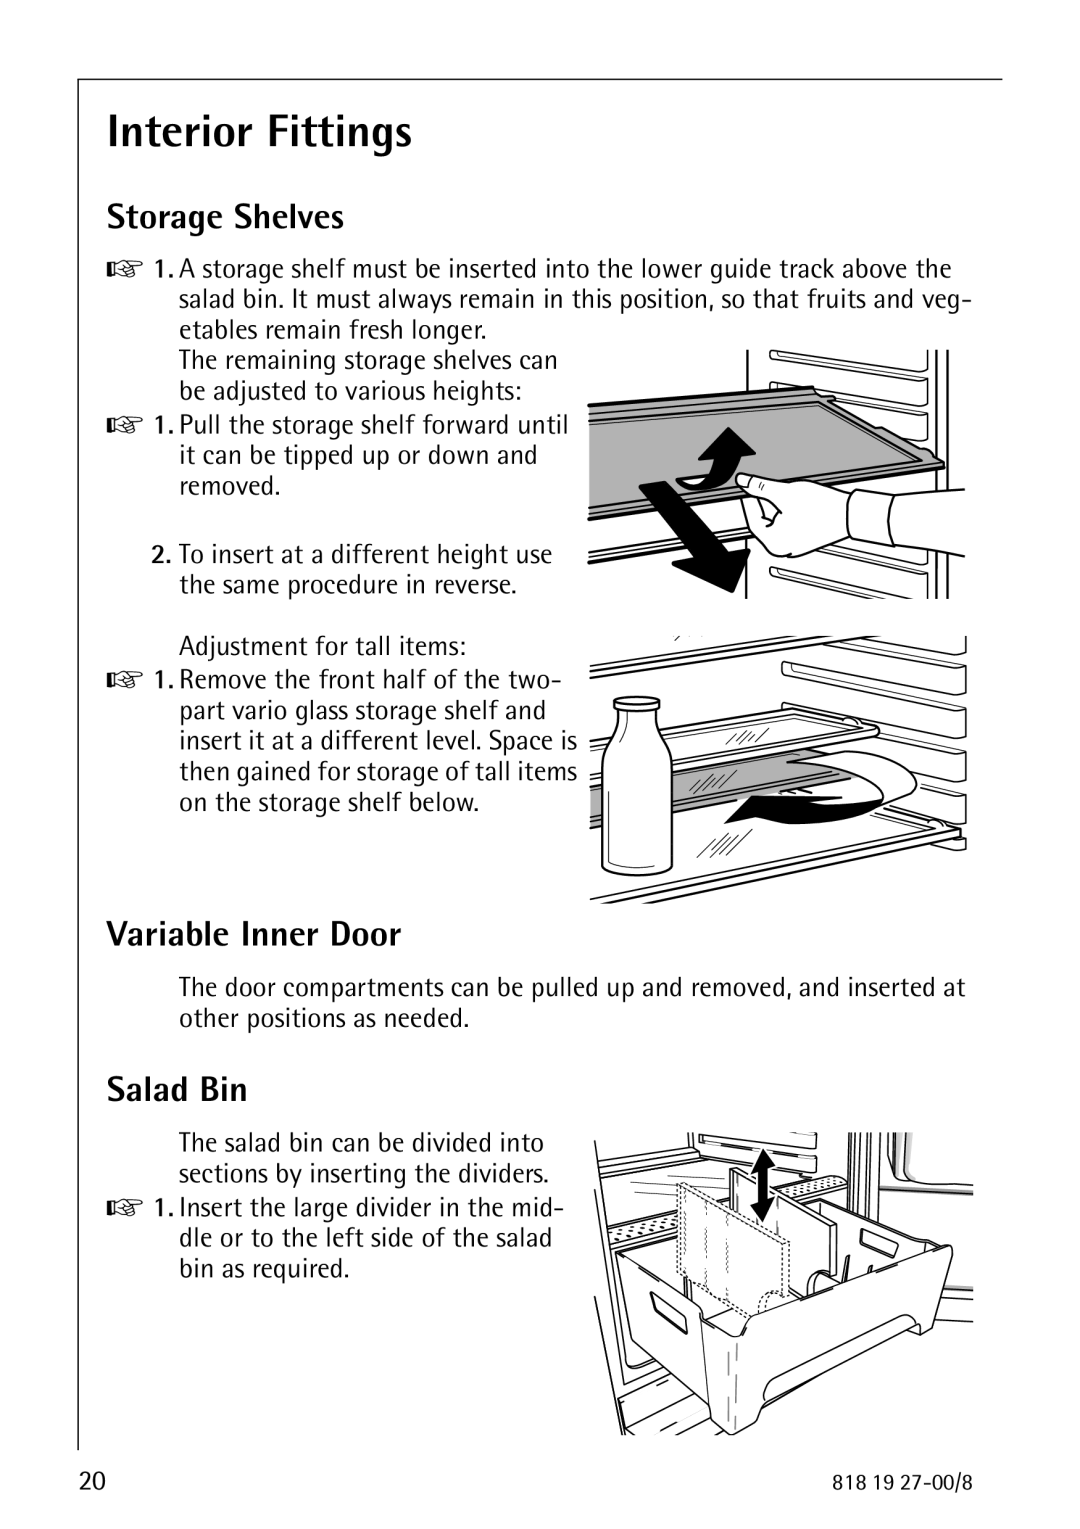 Electrolux Upright Refrigerator manual Interior Fittings, Storage Shelves, Variable Inner Door, Salad Bin 